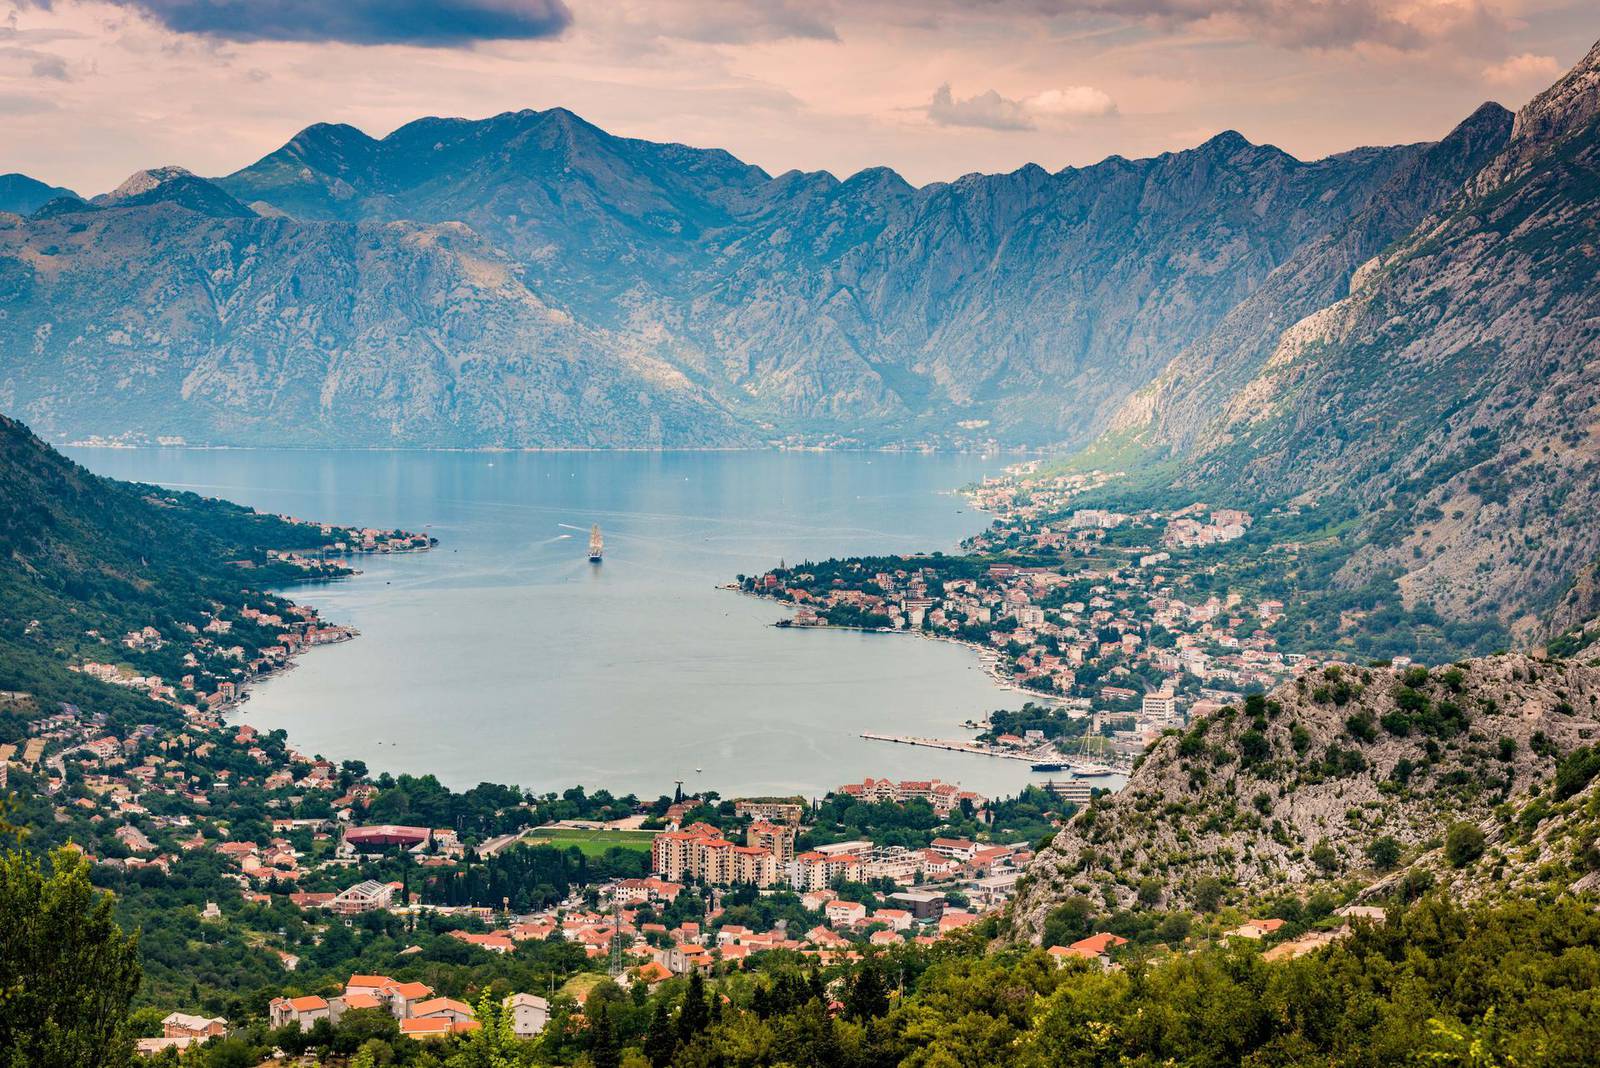 montenegro travel restrictions 2022